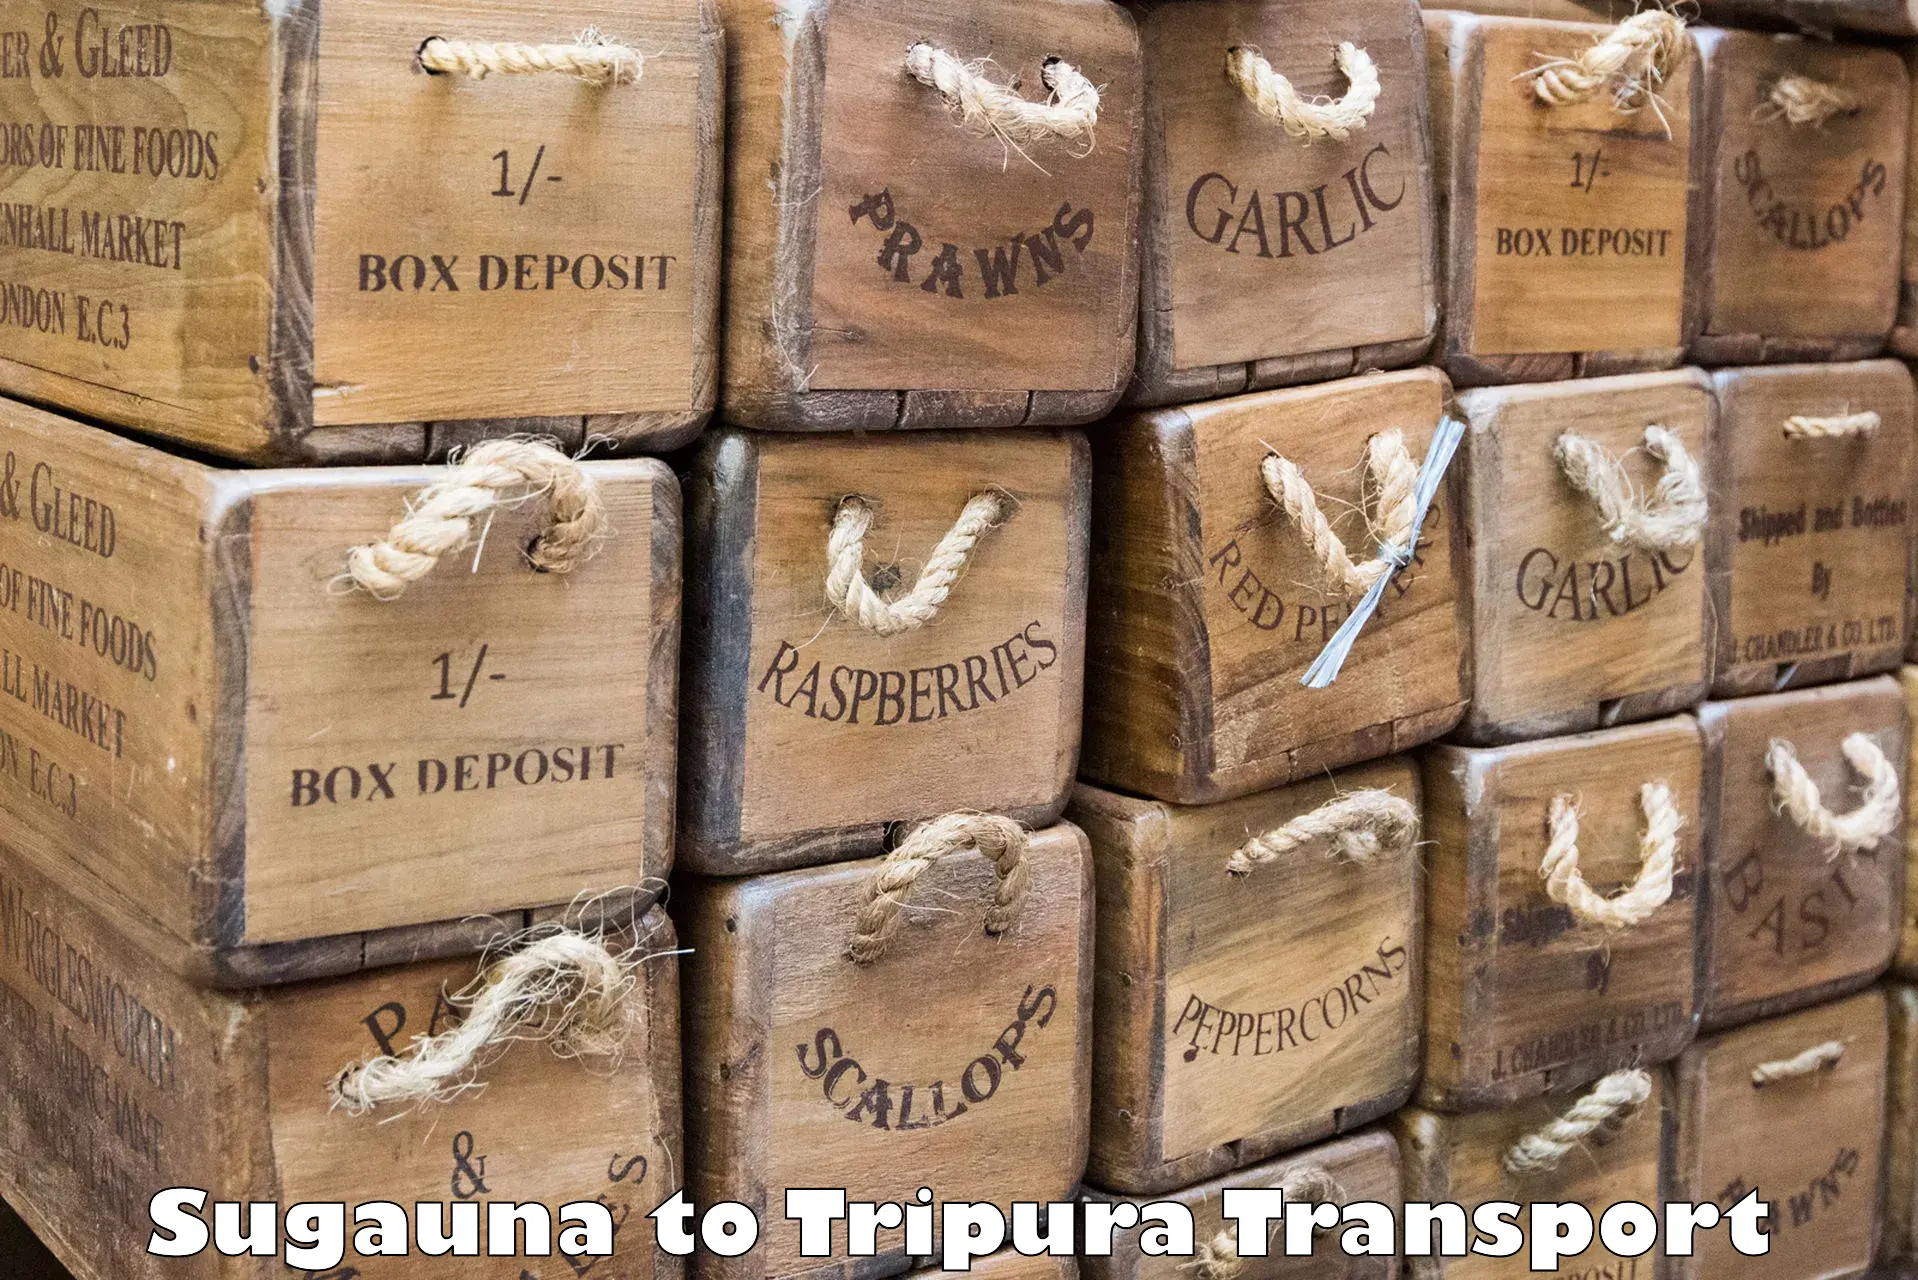 Daily transport service Sugauna to West Tripura